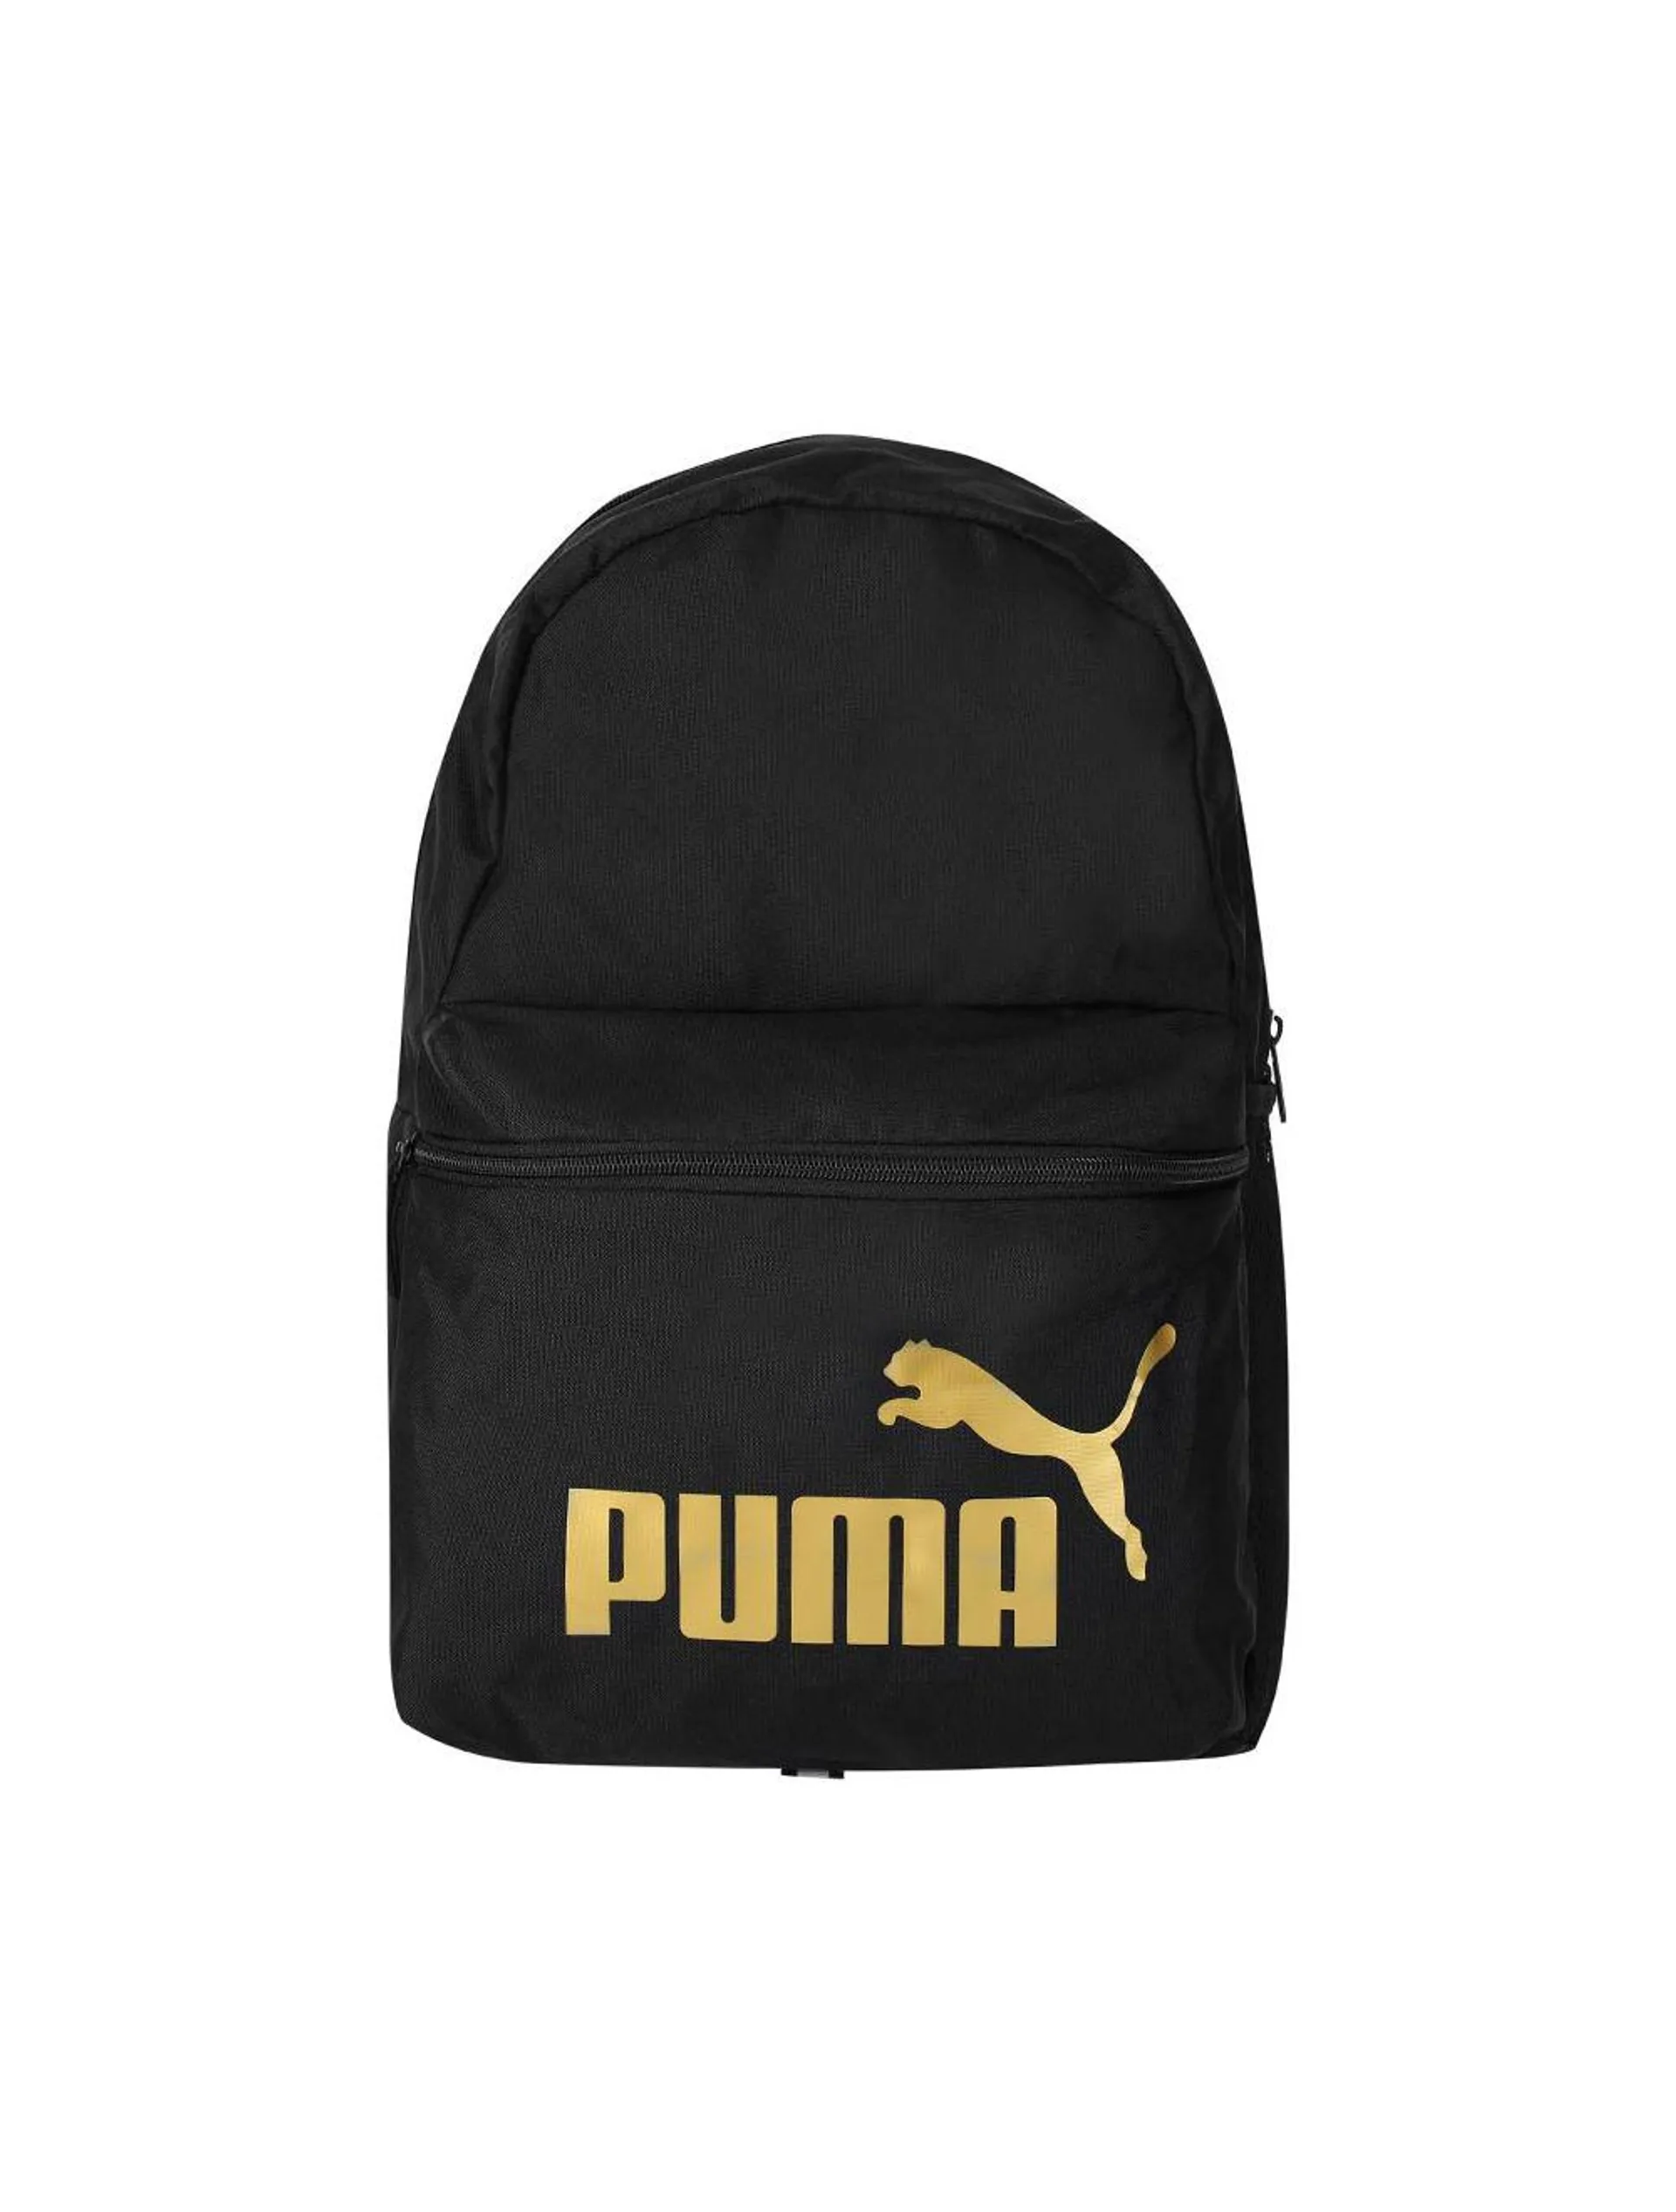 Puma Phase Backpack Black Gold